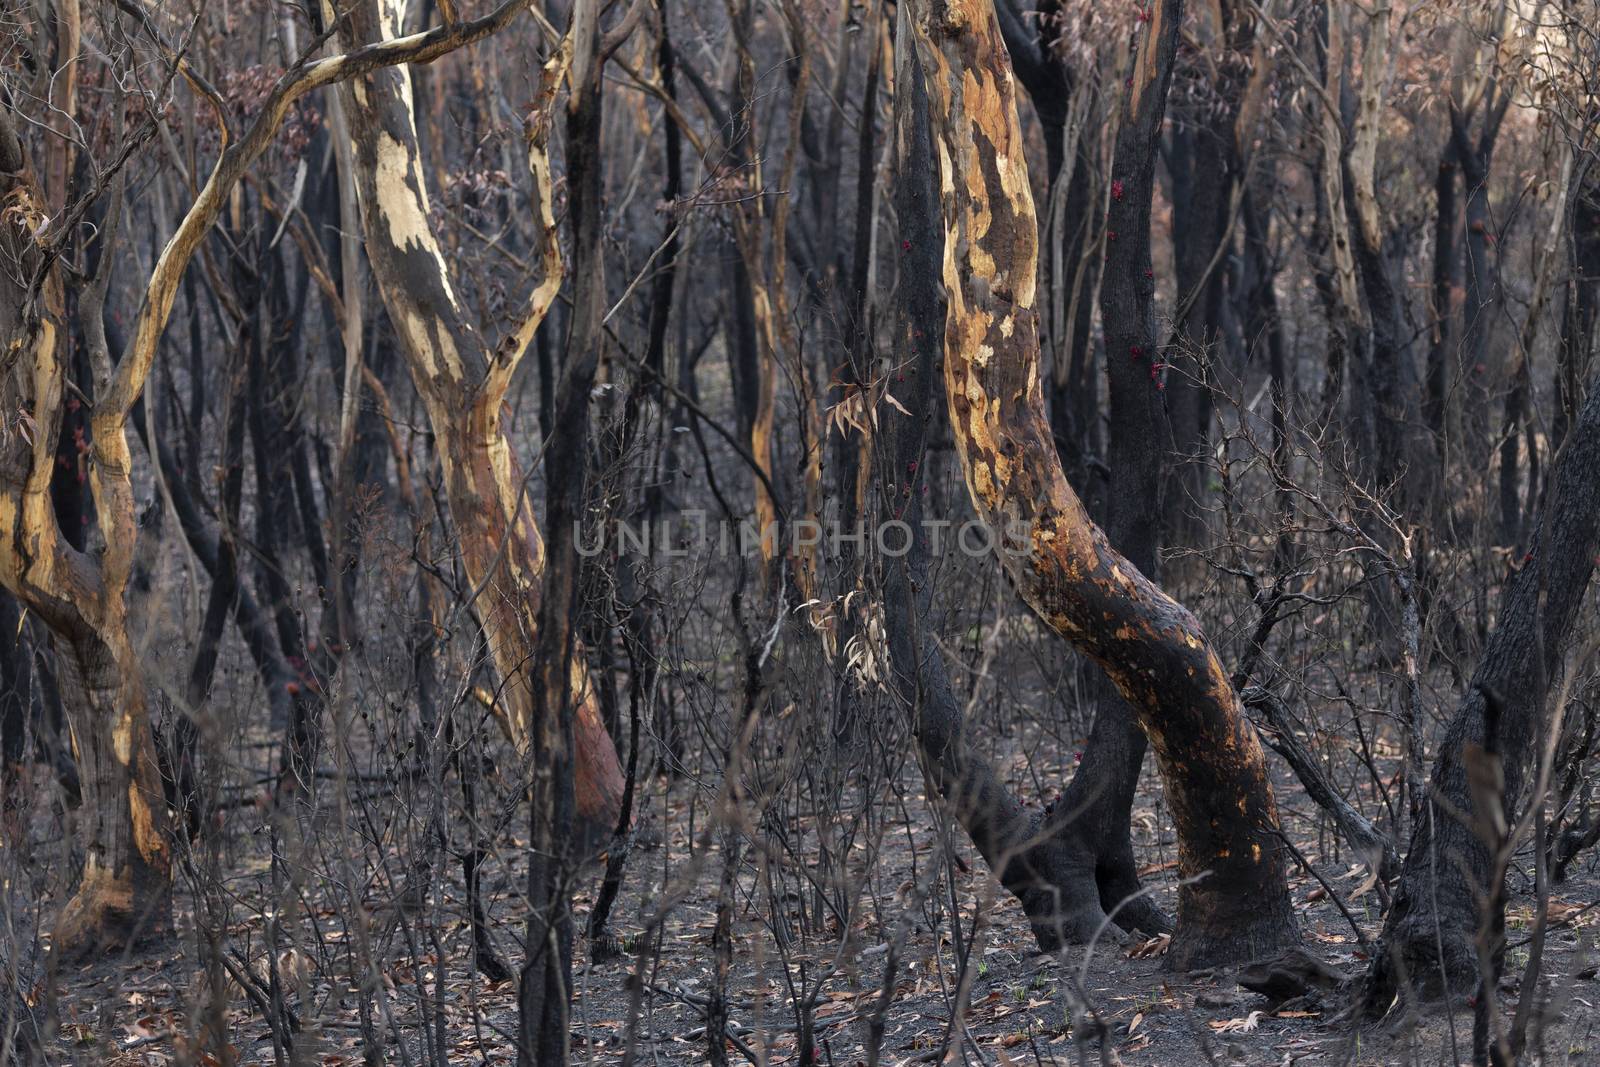 Australian bush fires burnt landscape of trees by lovleah